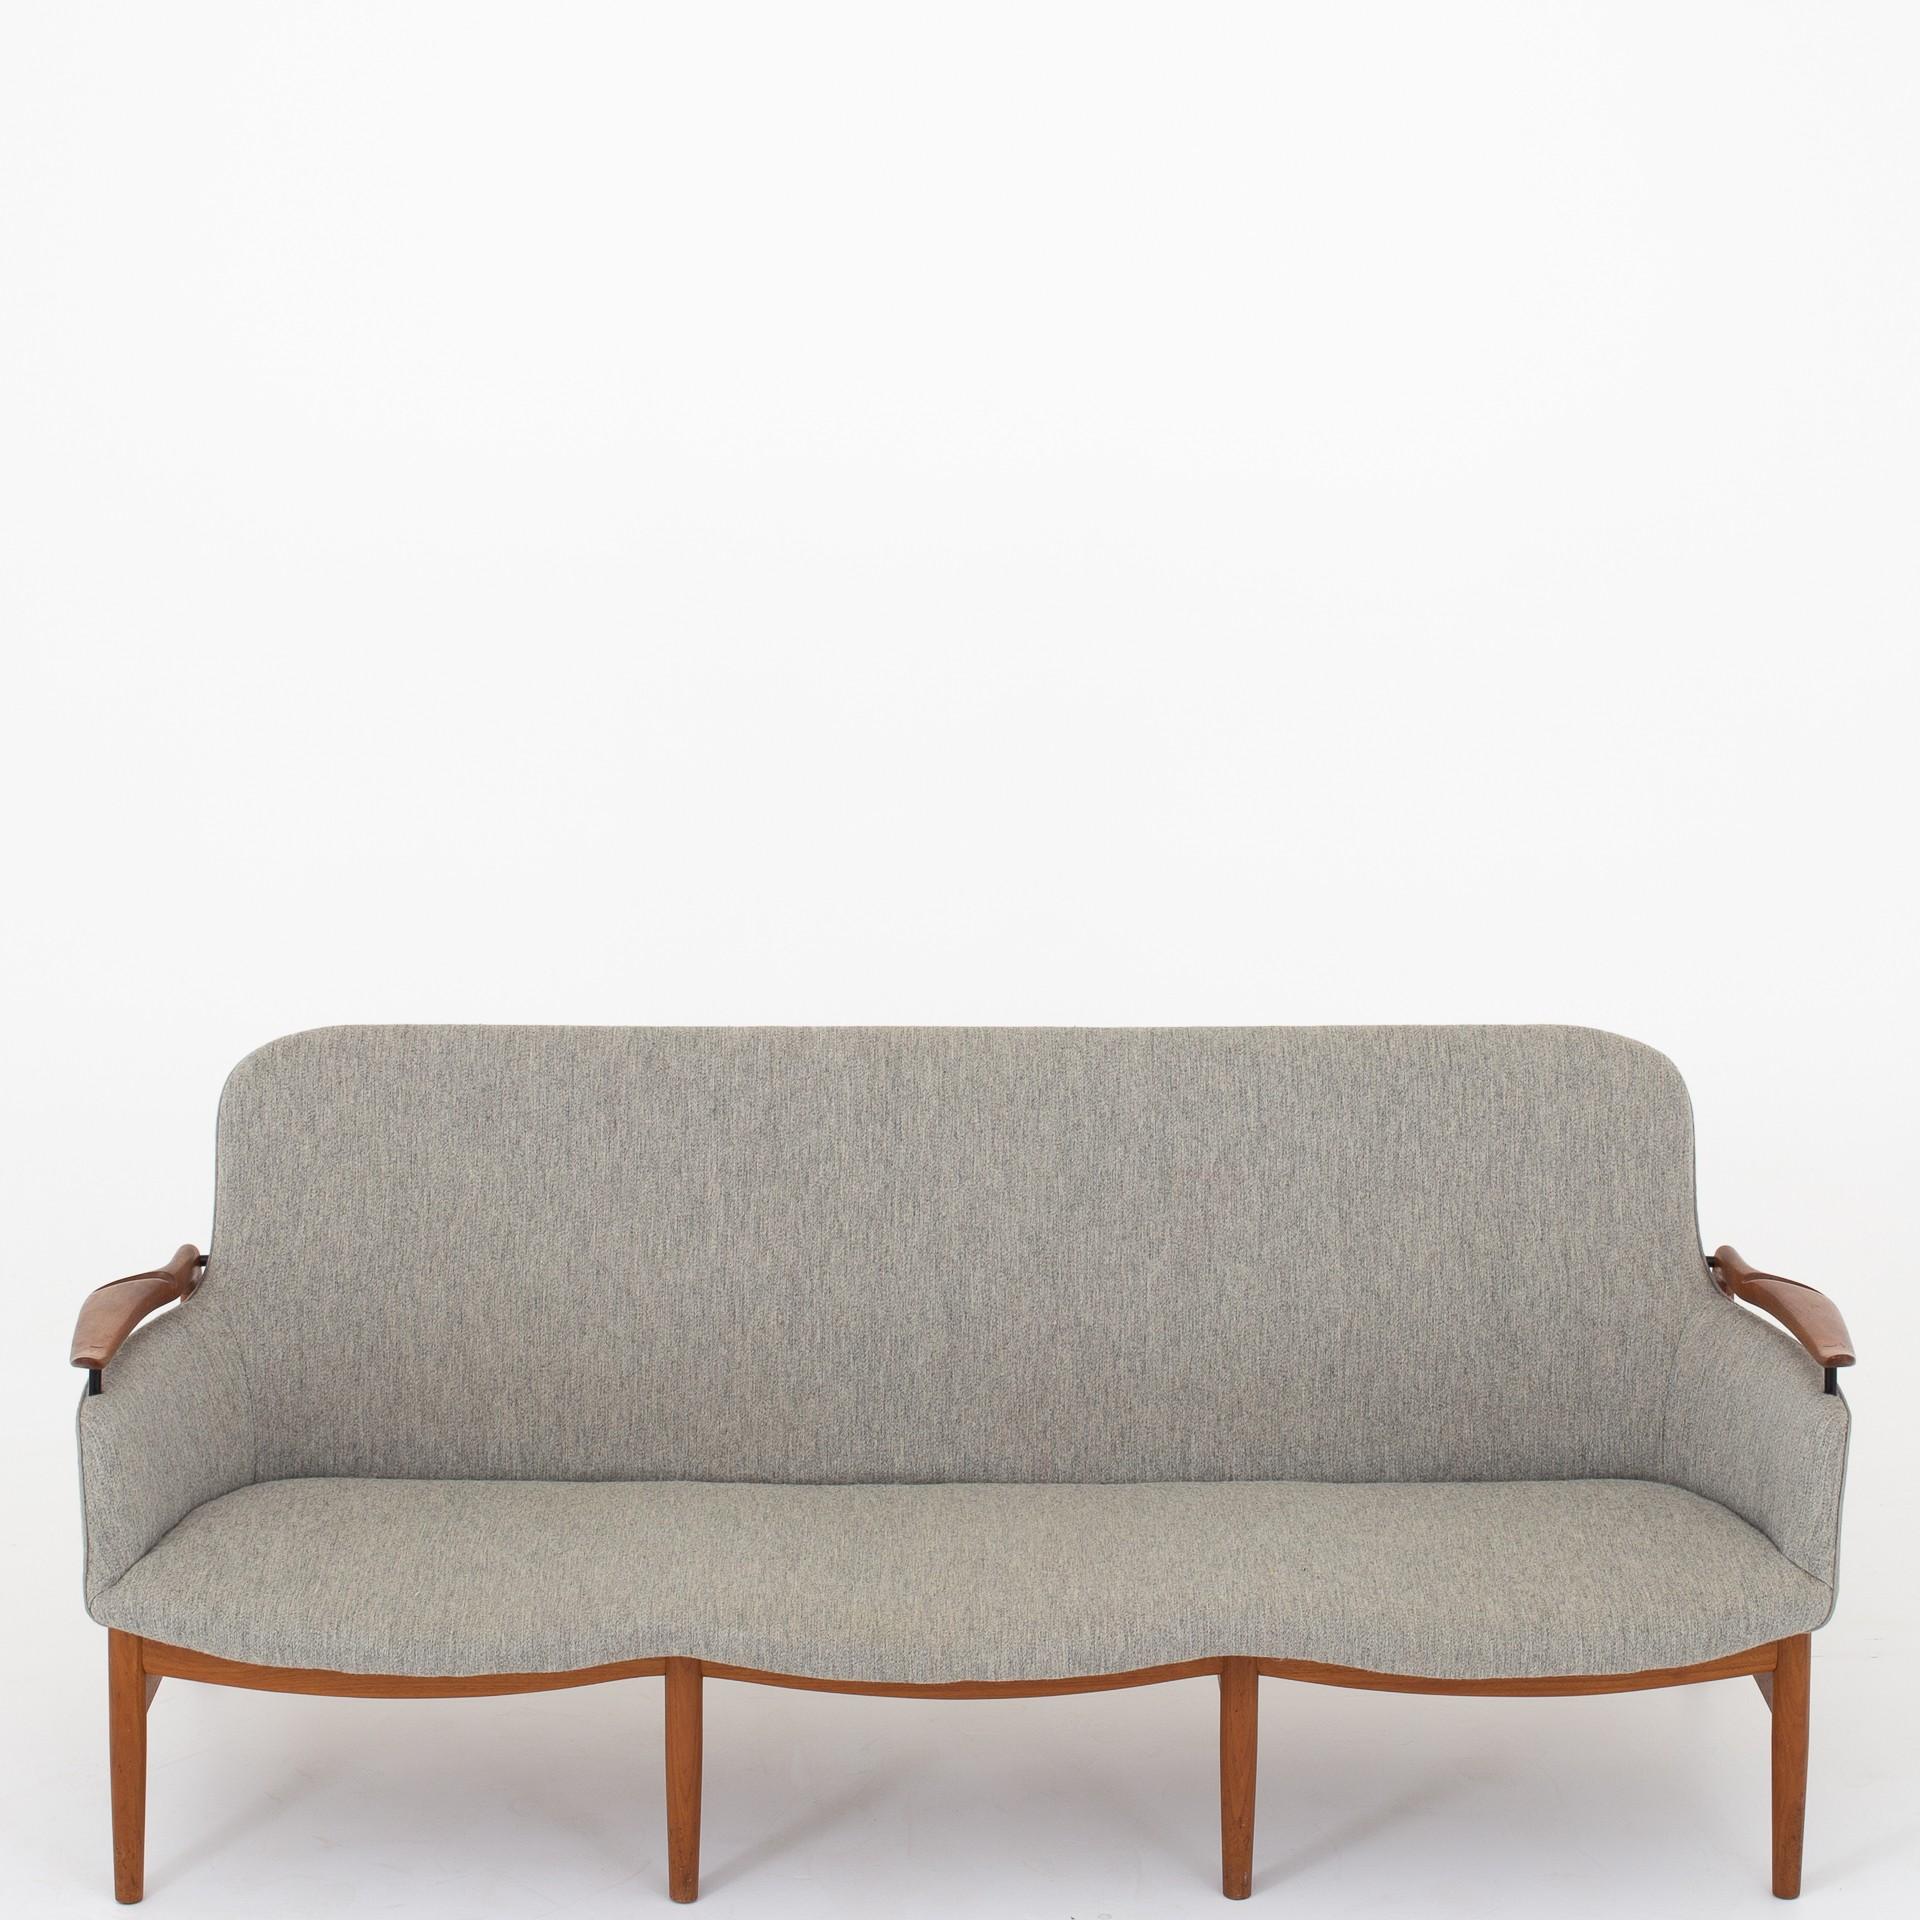 Teak NV 53 sofa by Finn Juhl